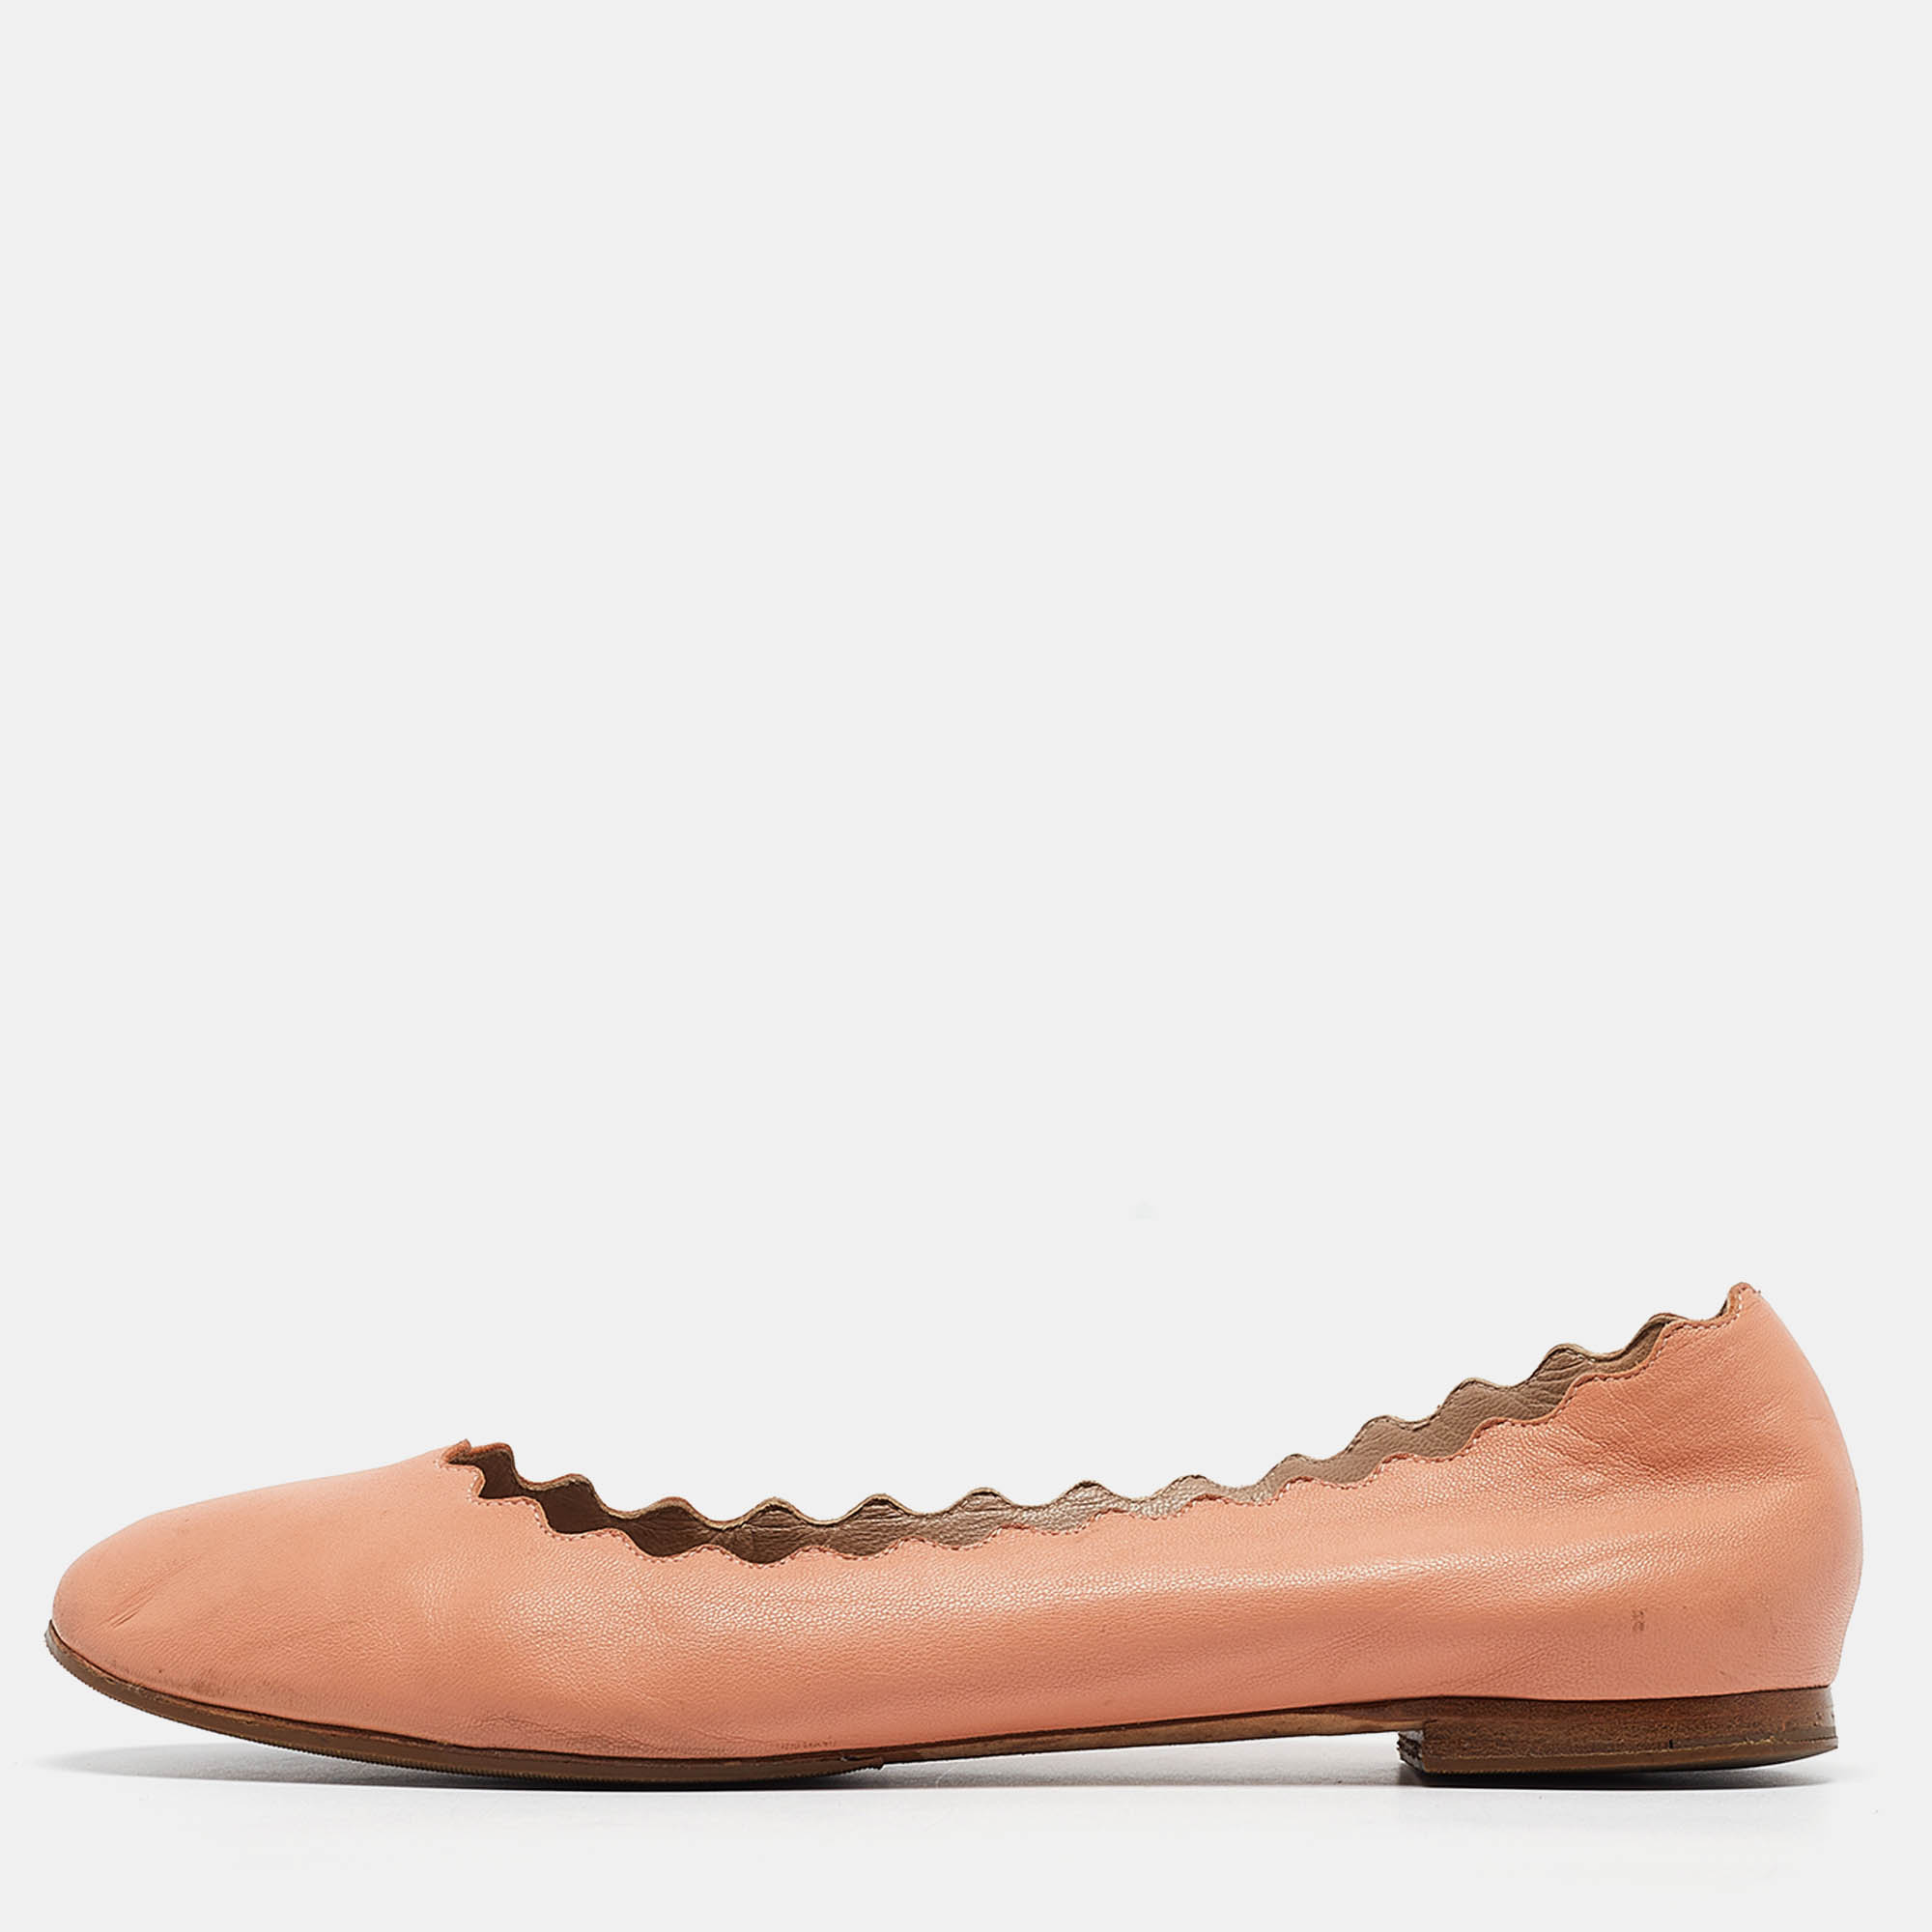 Chloe peach pink scalloped leather lauren ballet flats size 37